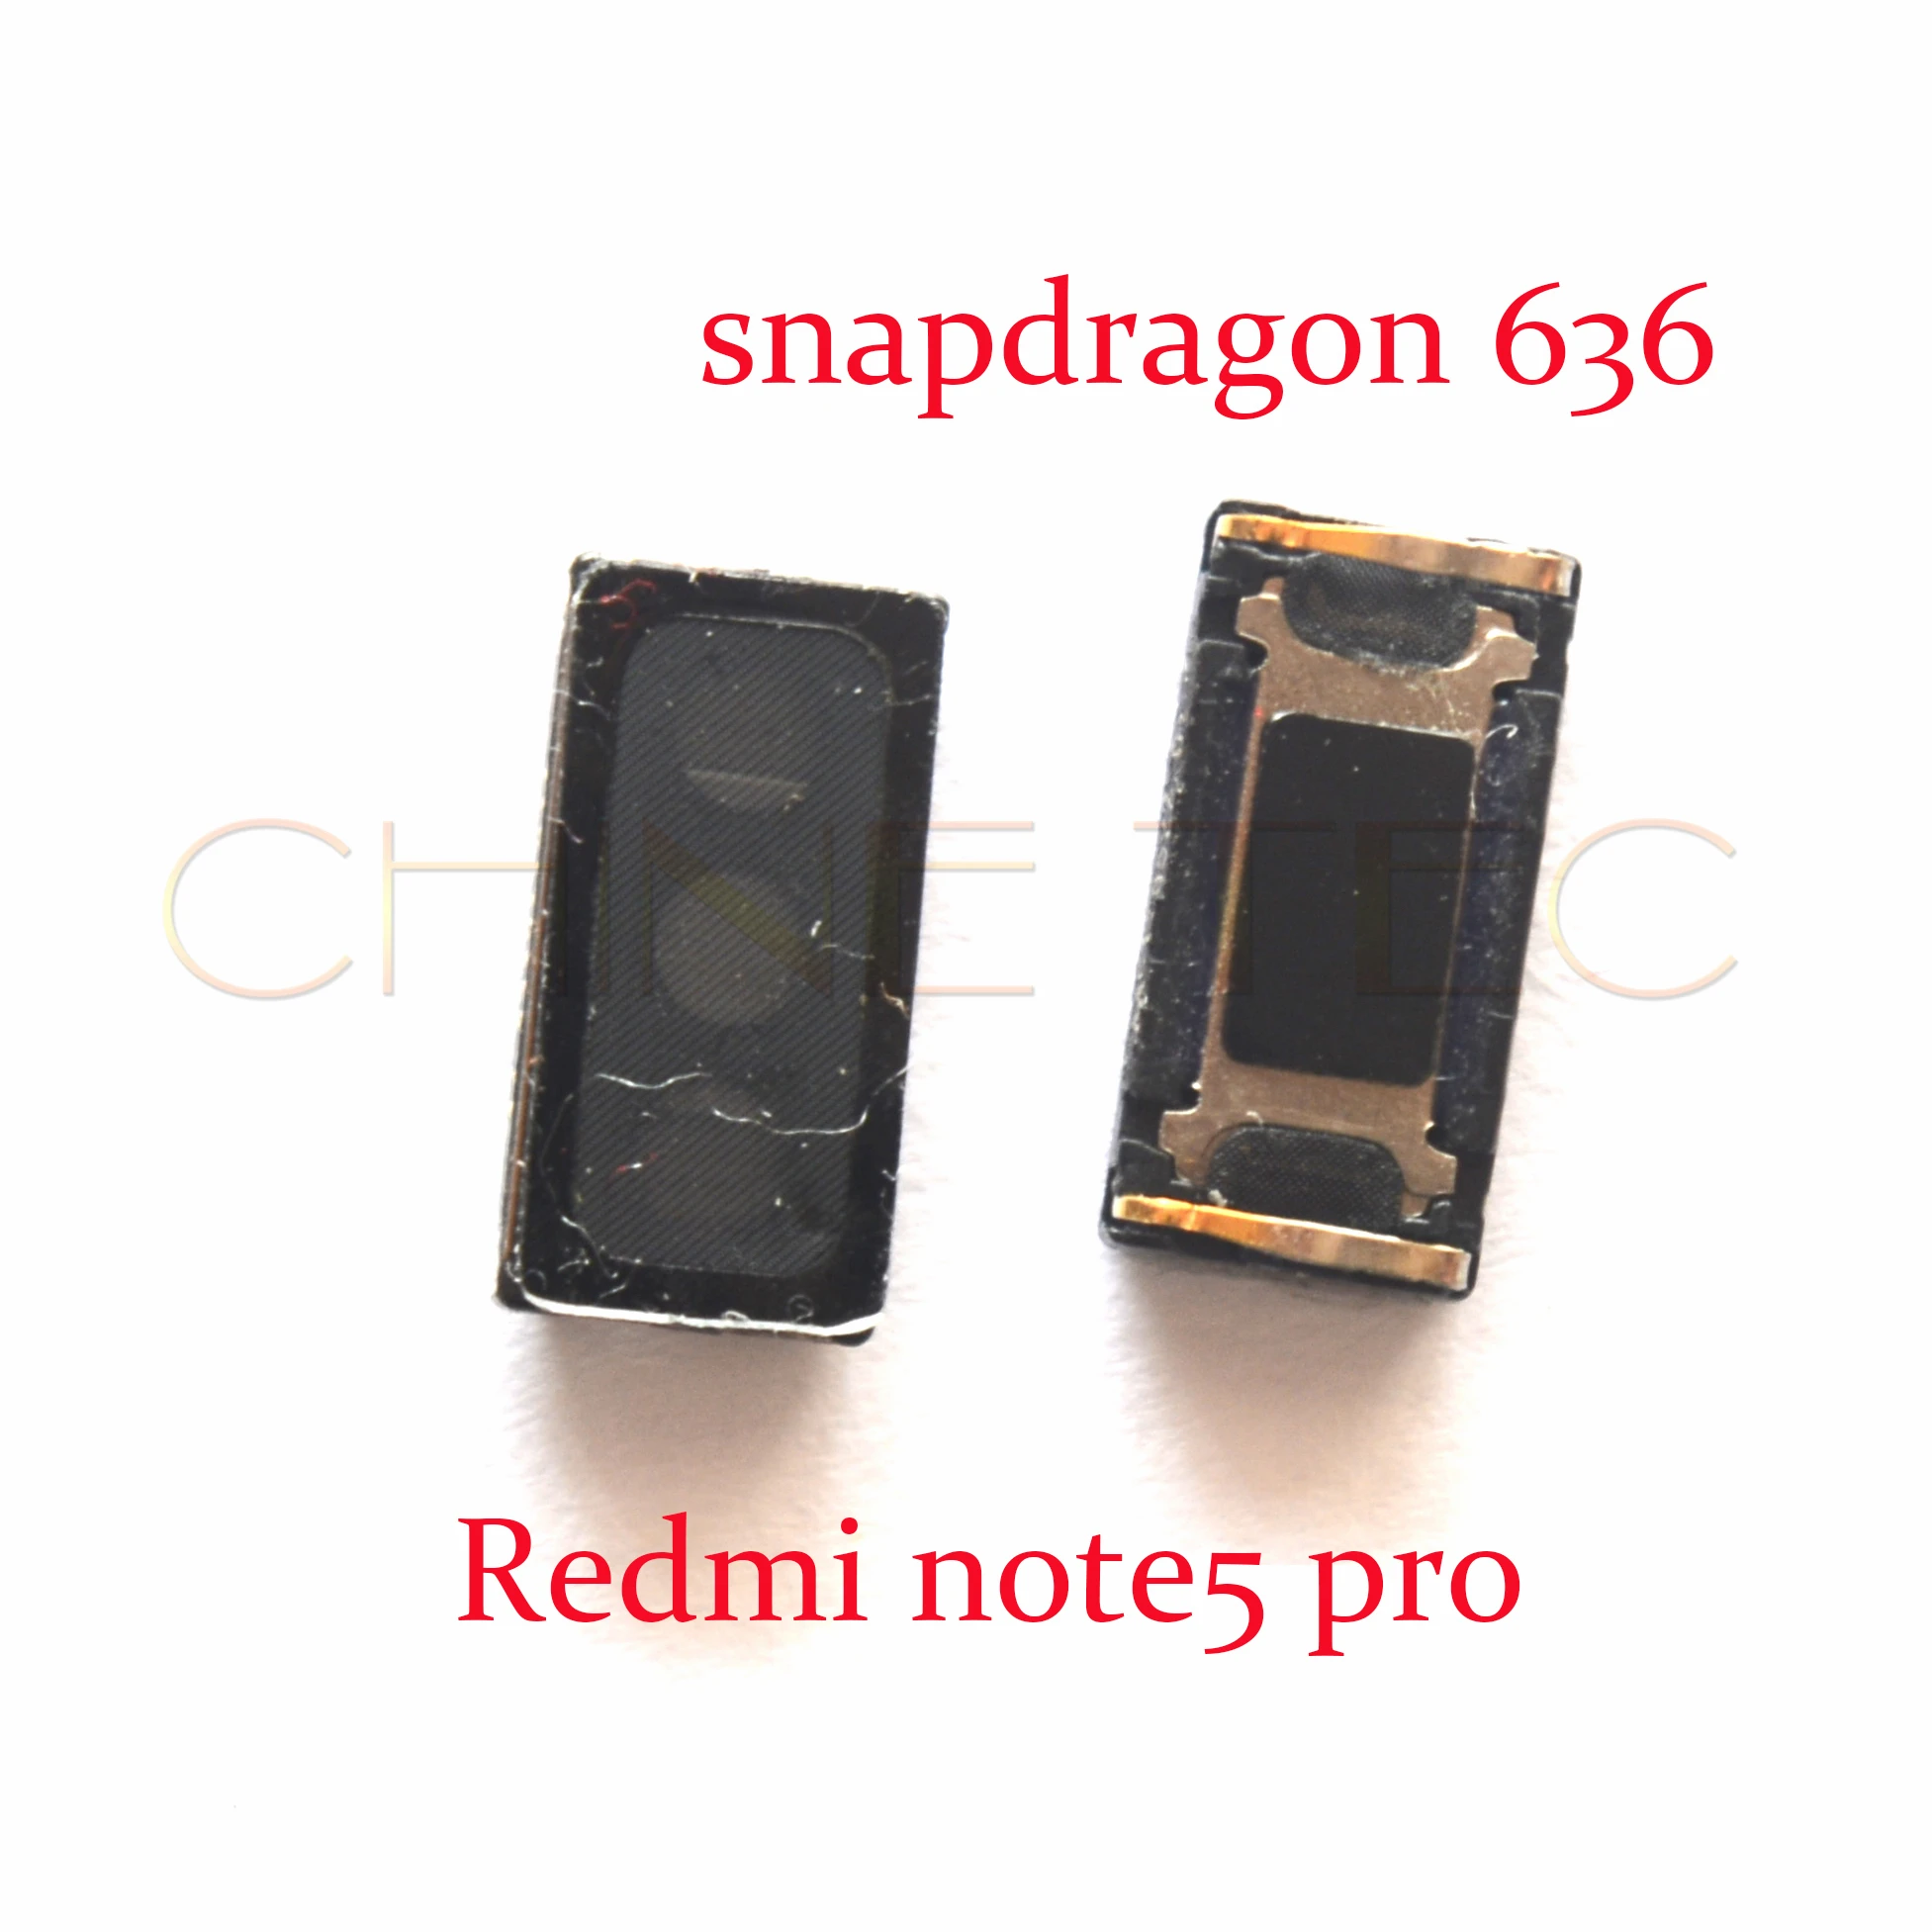 2x Динамик для наушников для Xiaomi mi A1 A2 lite redmi 5 5 plus 5A redmi Note 5A Y1 Y2 S2(redmi Y1/lite/Prime) mi A1